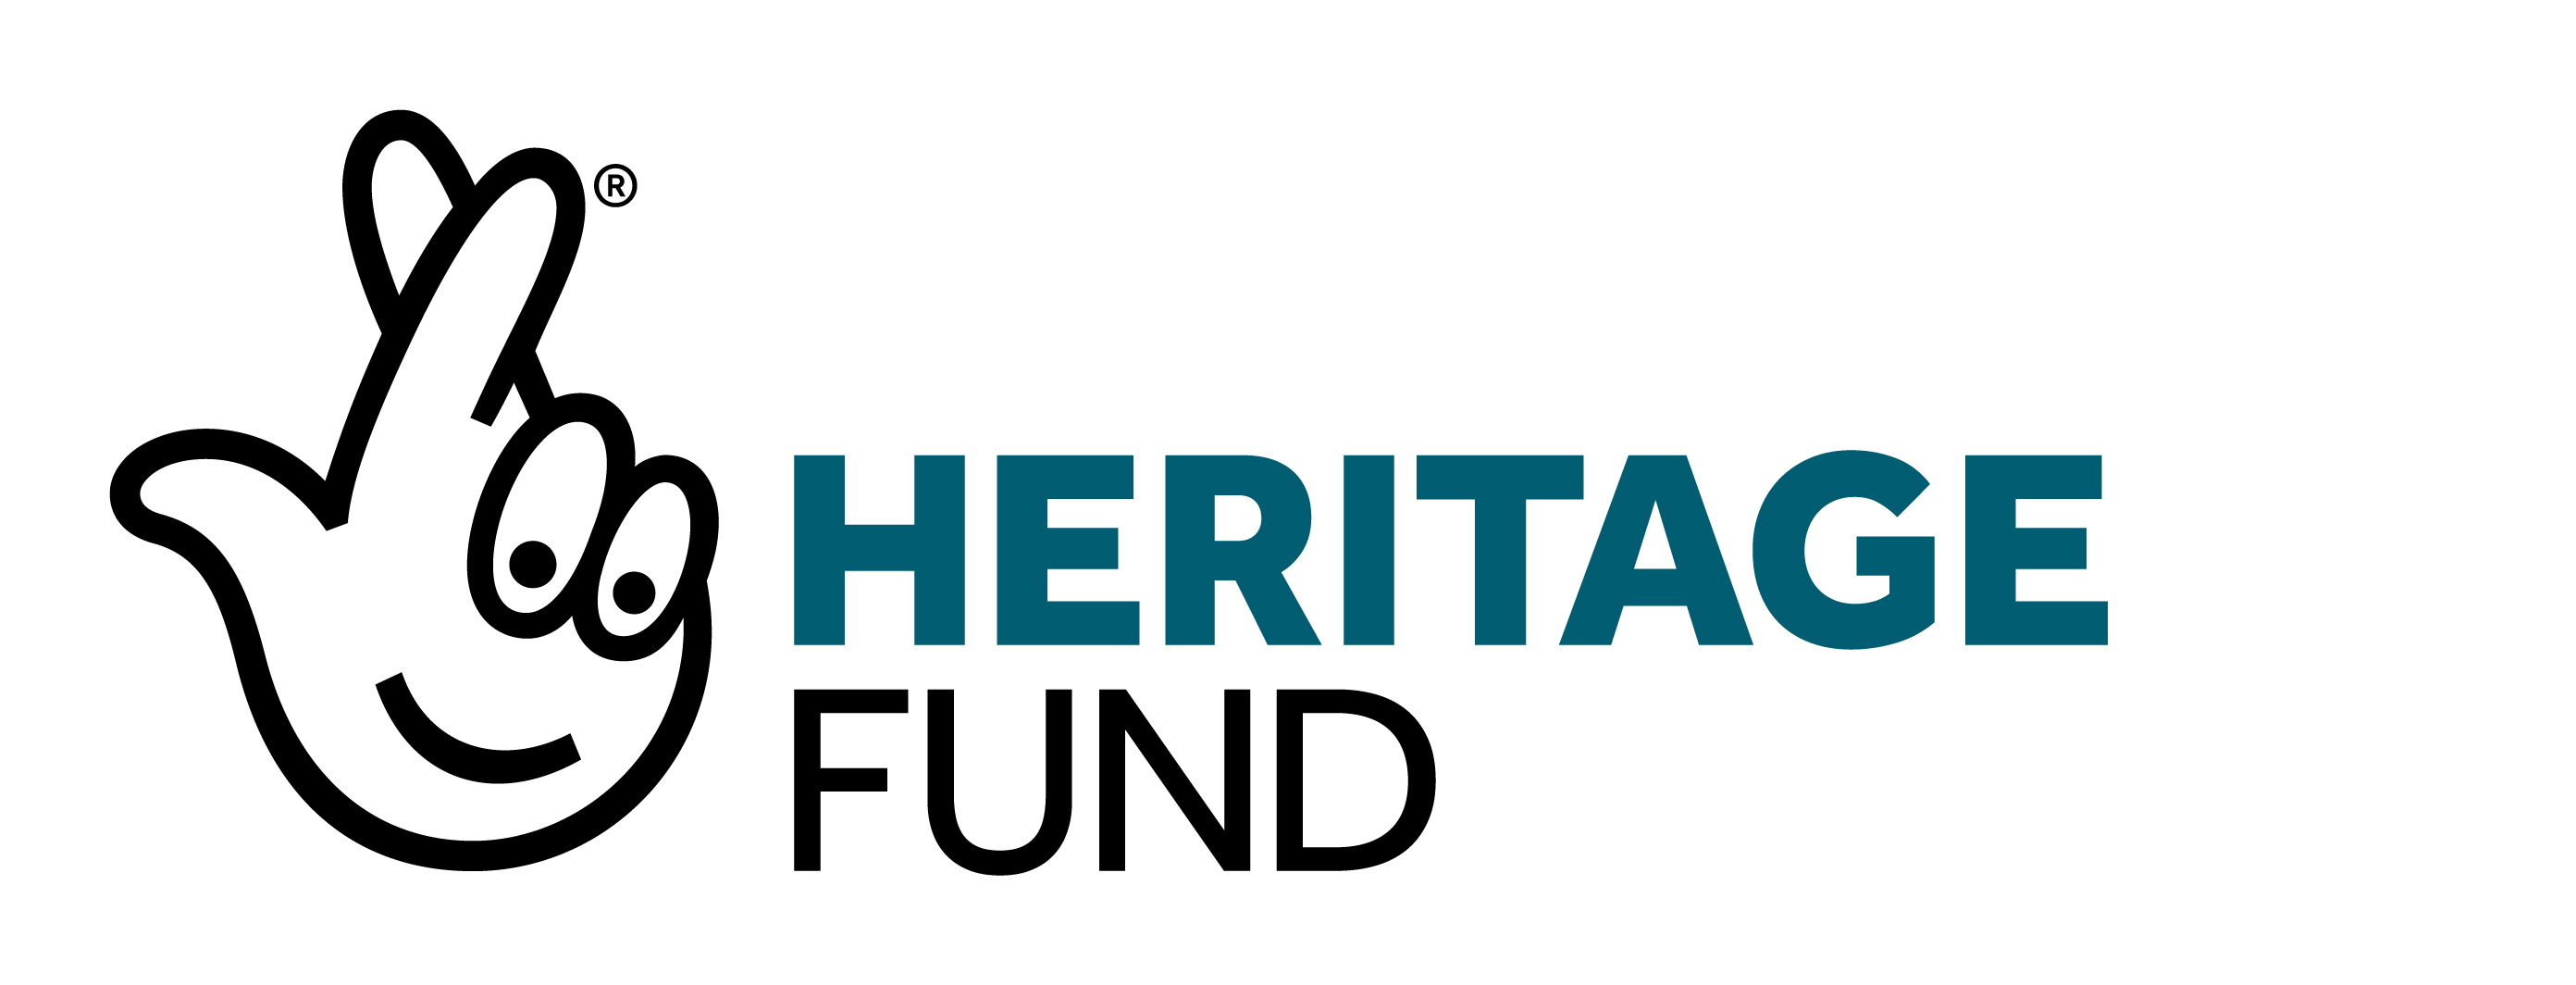 National Heritage Lottery Fund logo